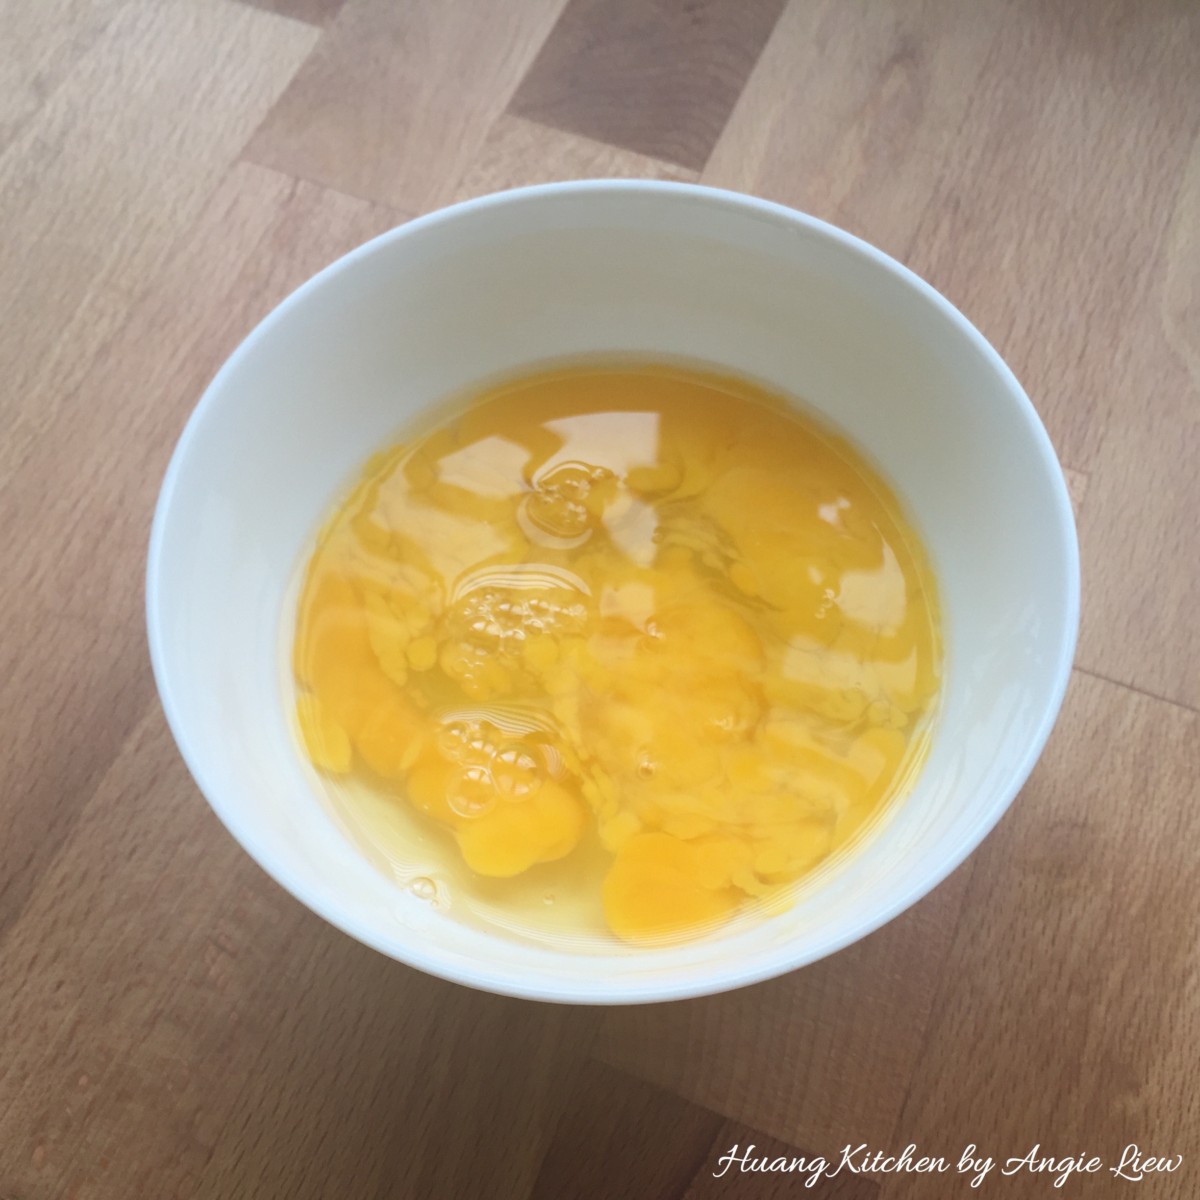 Spiral Curry Puffs recipe - beat eggs